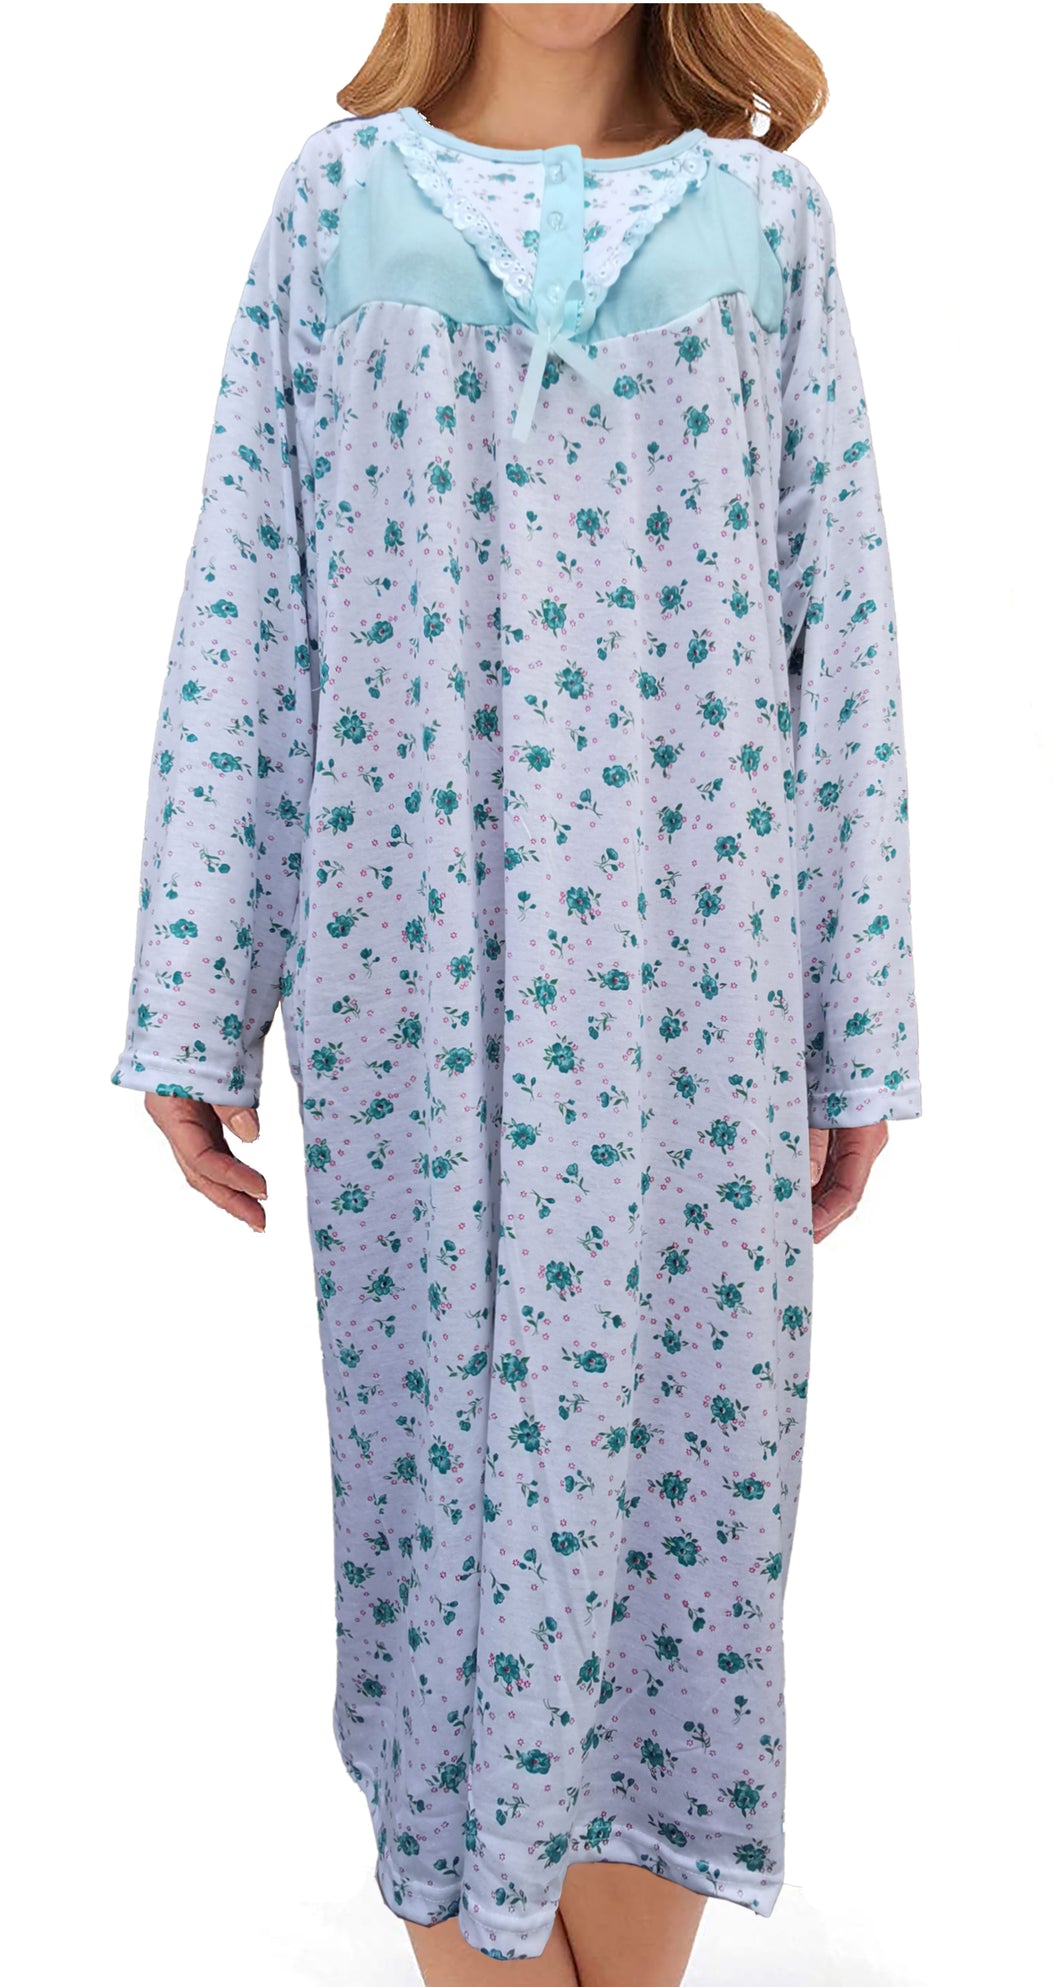 Women's Nightdress Long Sleeve Nightshirt 100% Cotton Nightwear Plus Size Ladies Pajamas Flowers Print